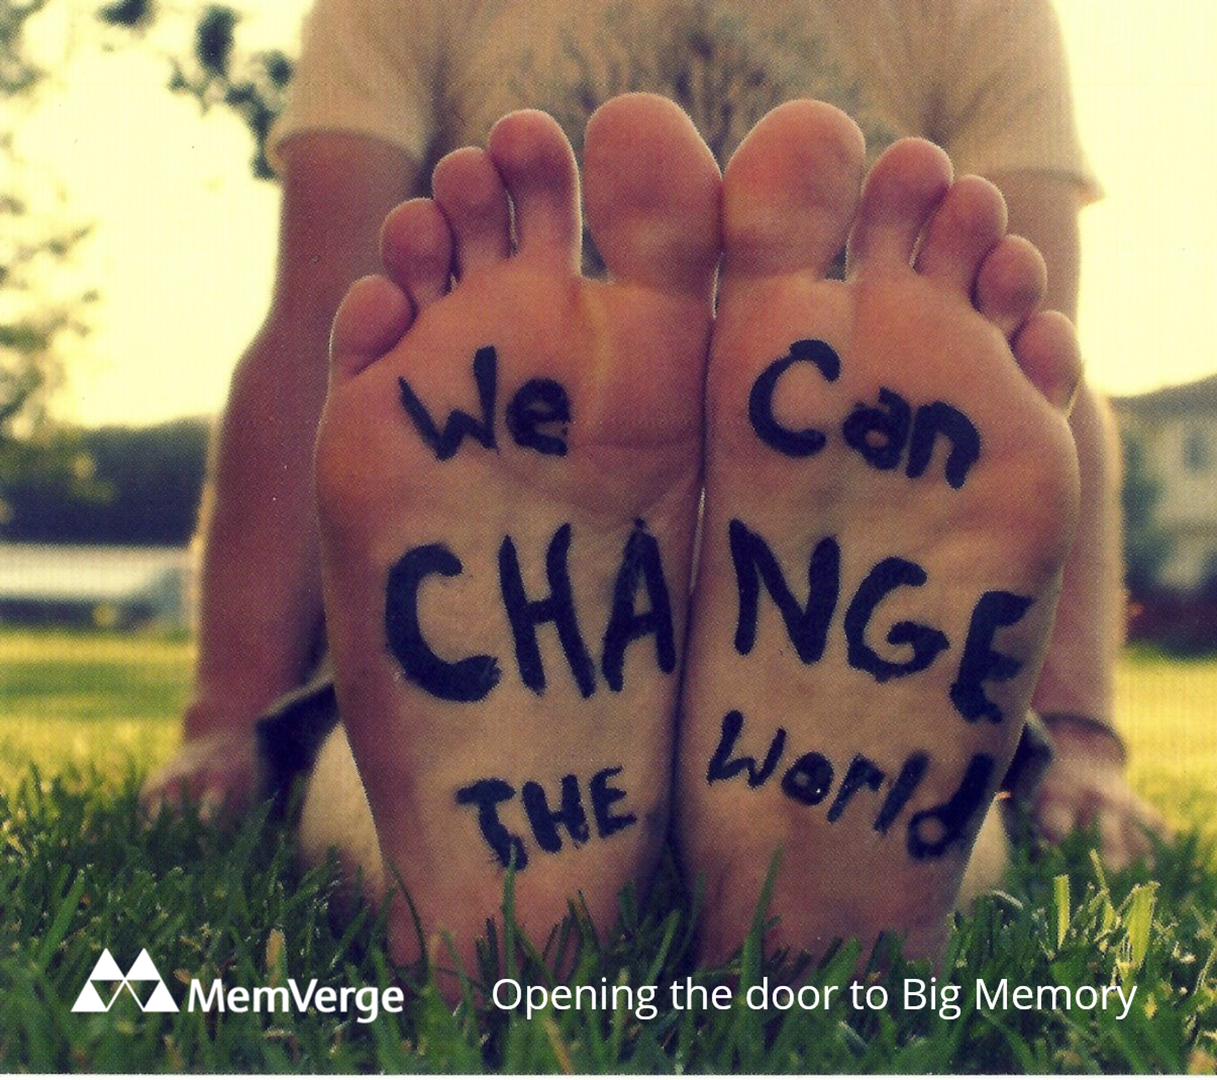 MemVerge - We Can Change the World